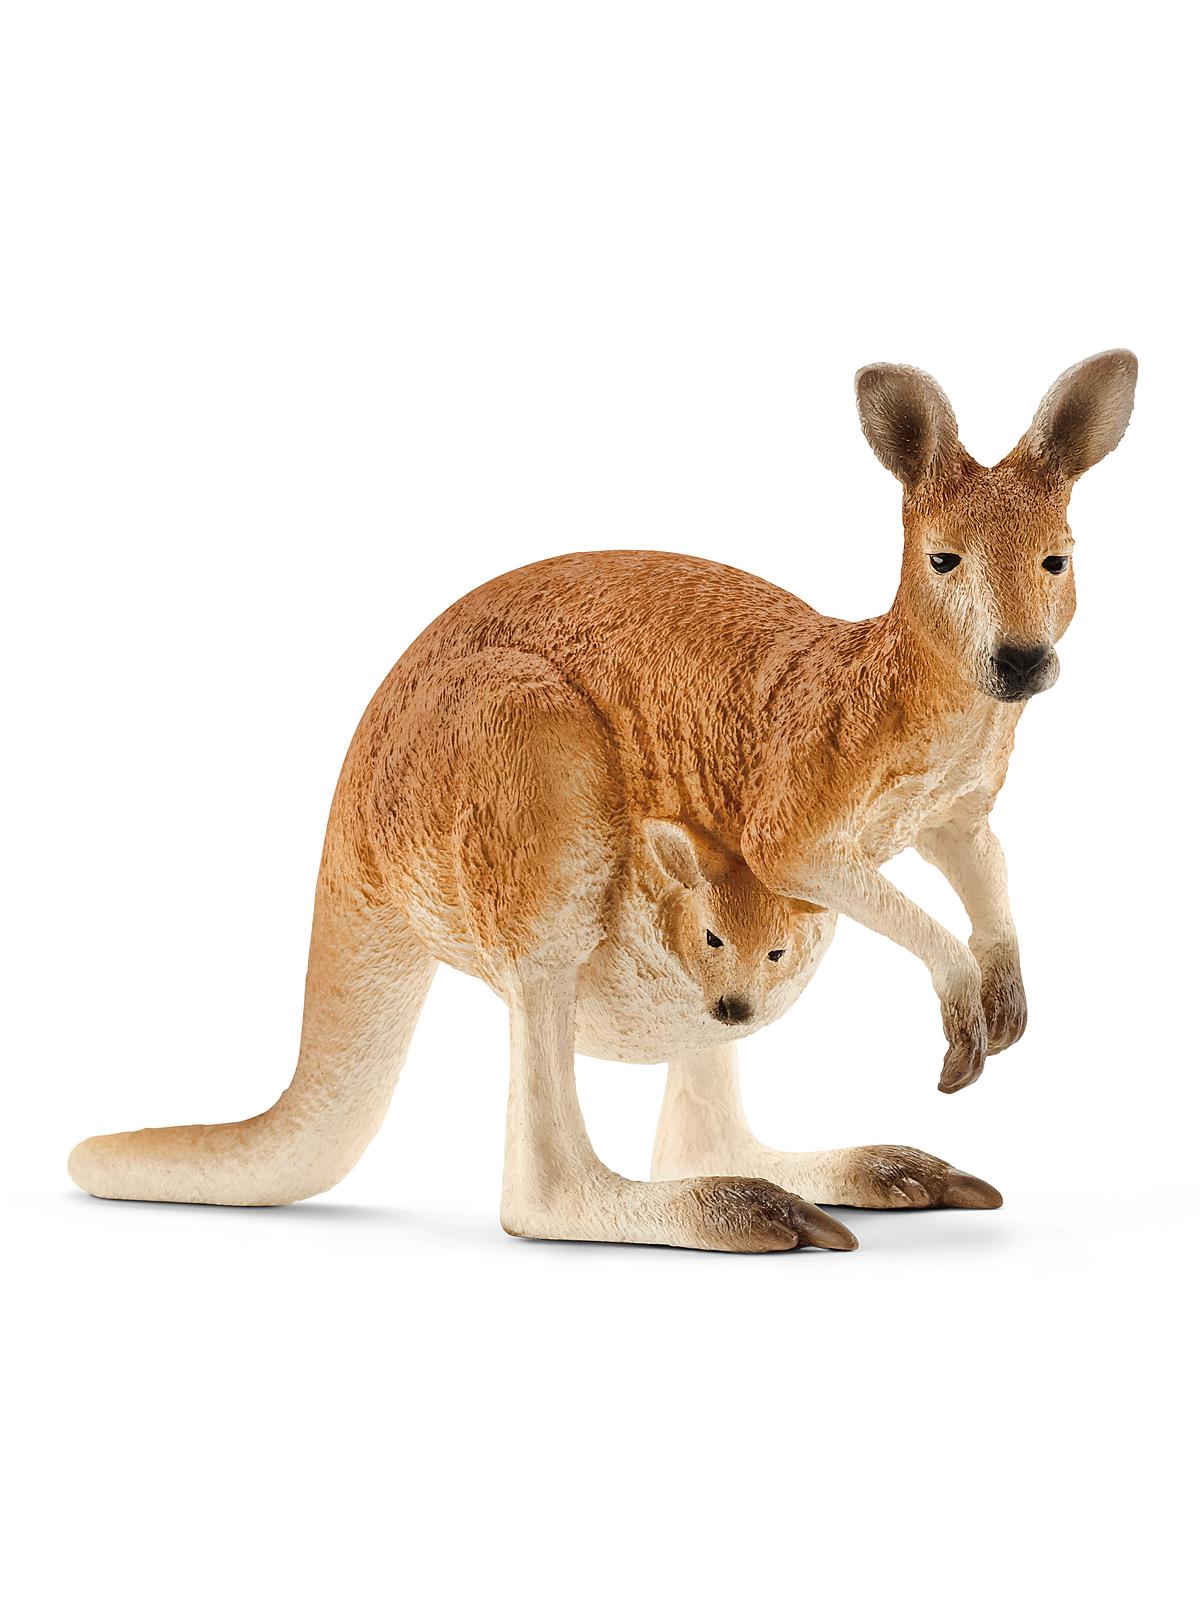 Wild Life Animals Kangaroo